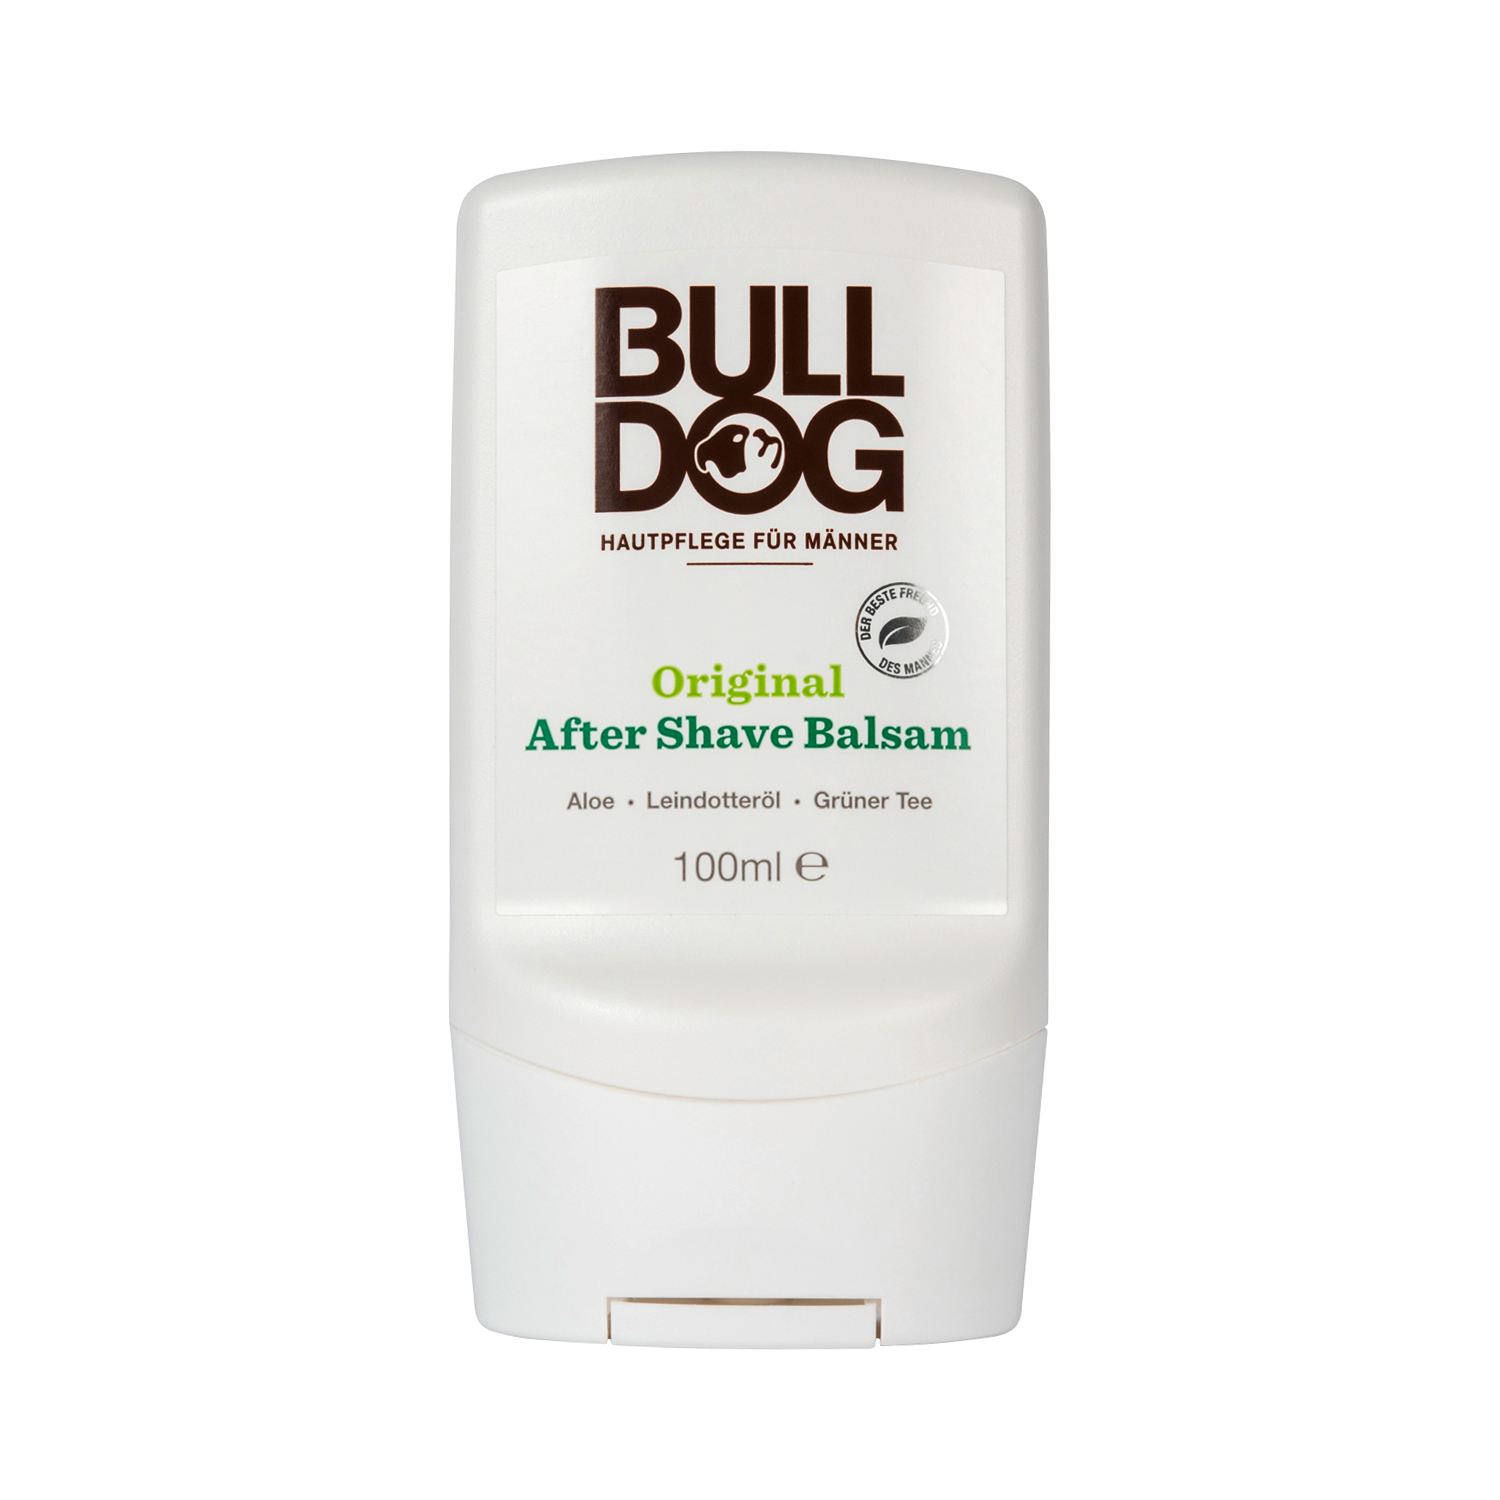 Bulldog - Original After Shave Balsam